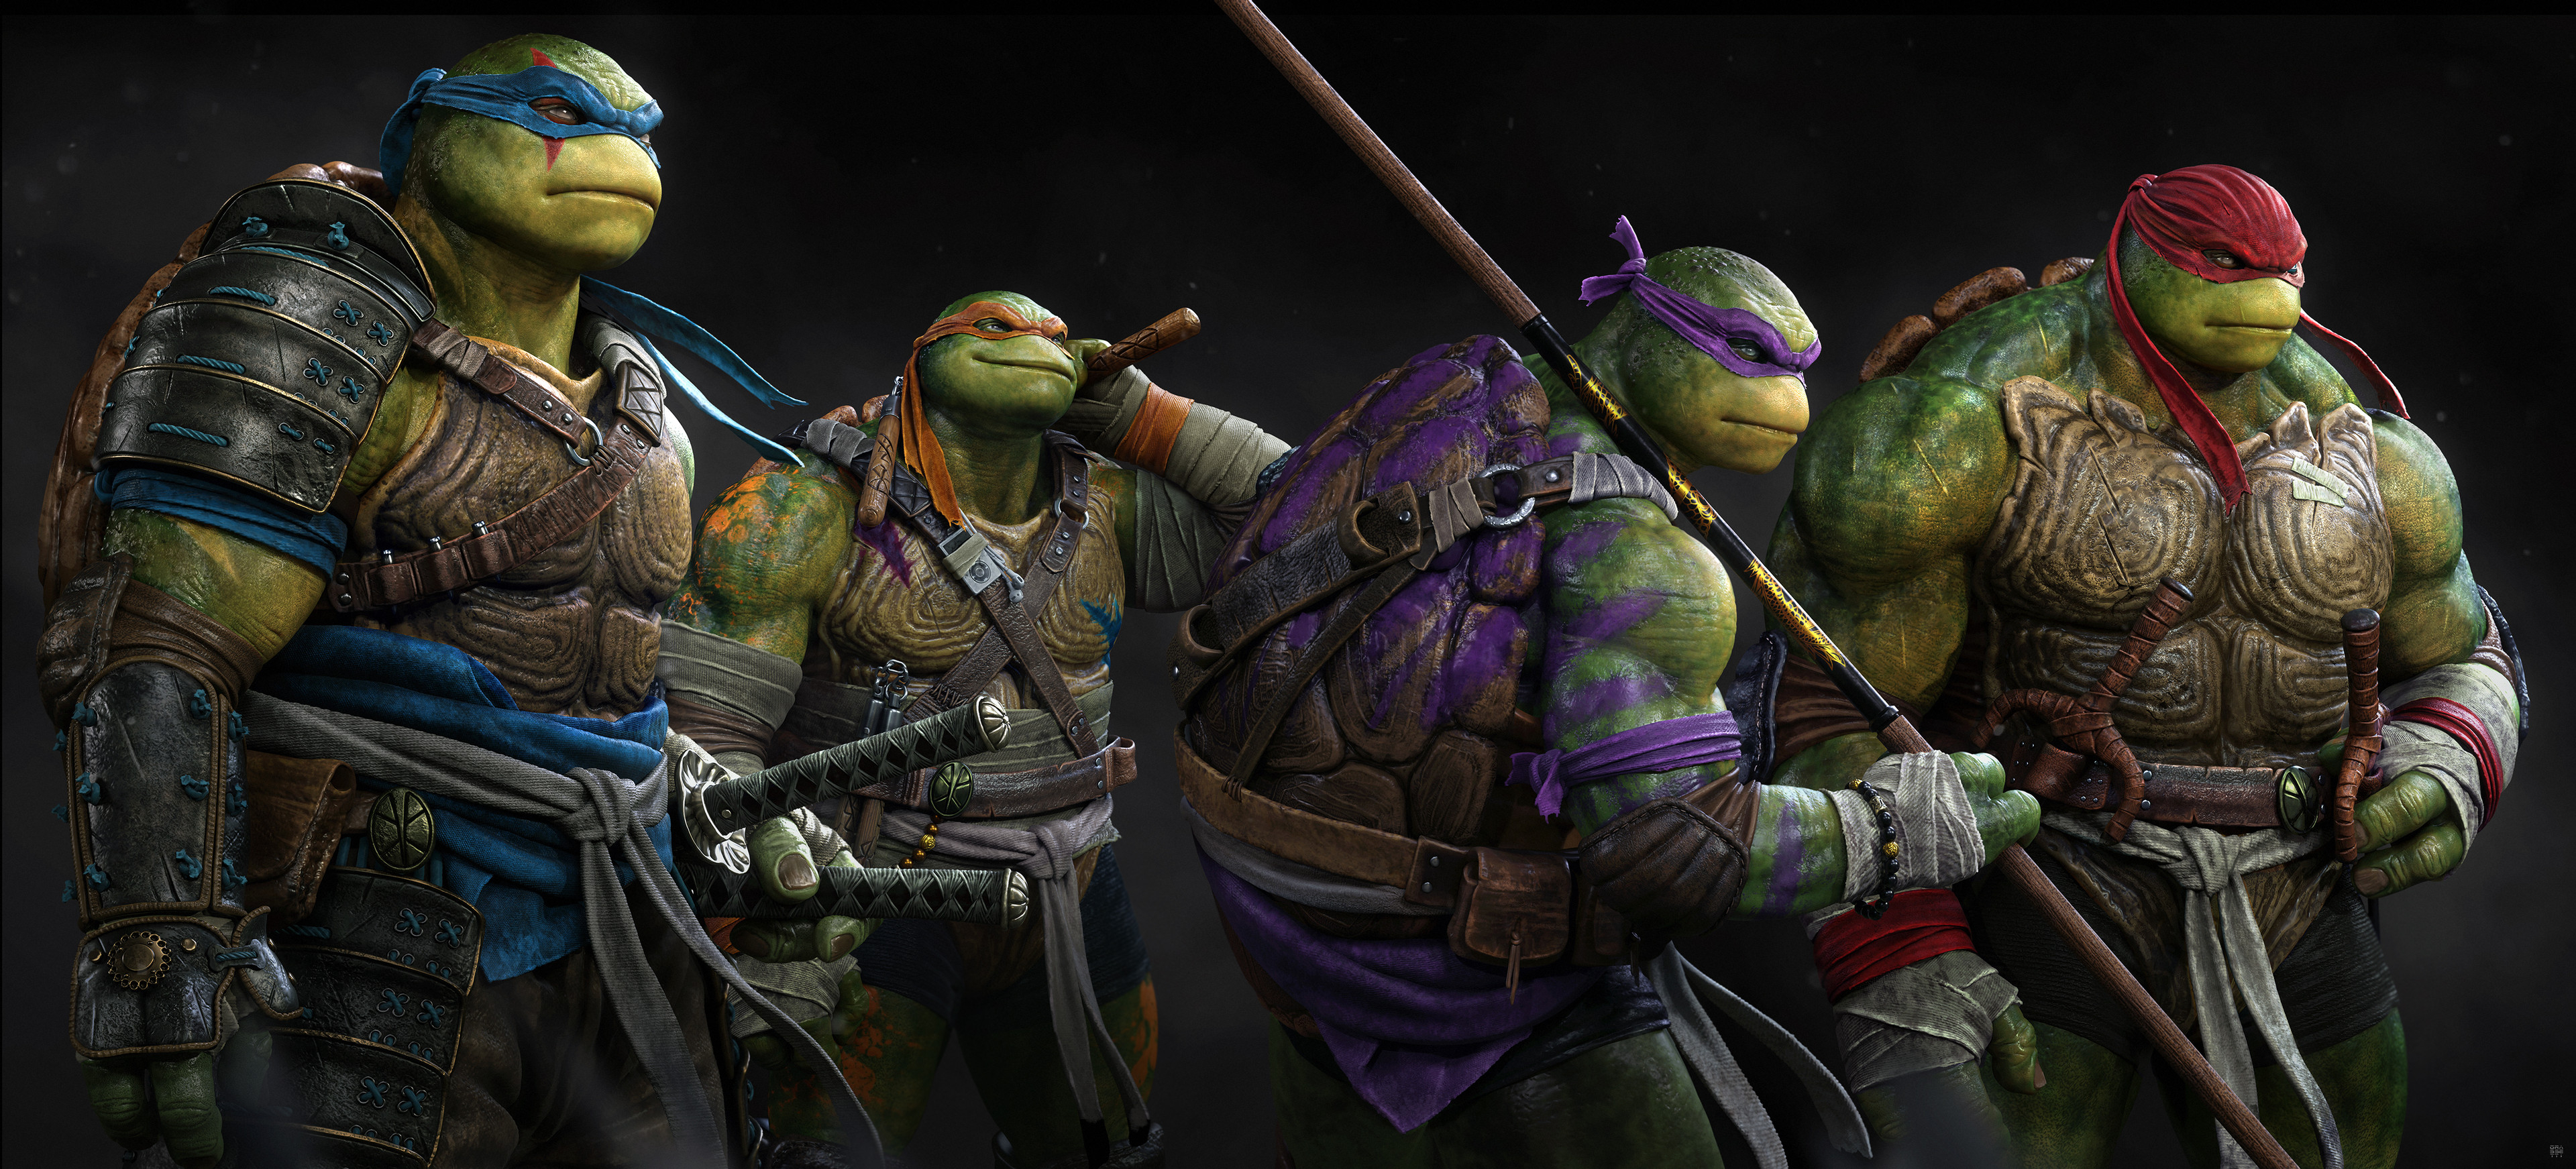 3840x1743 60+ Teenage Mutant Ninja Turtles HD Wallpapers and Backgrounds